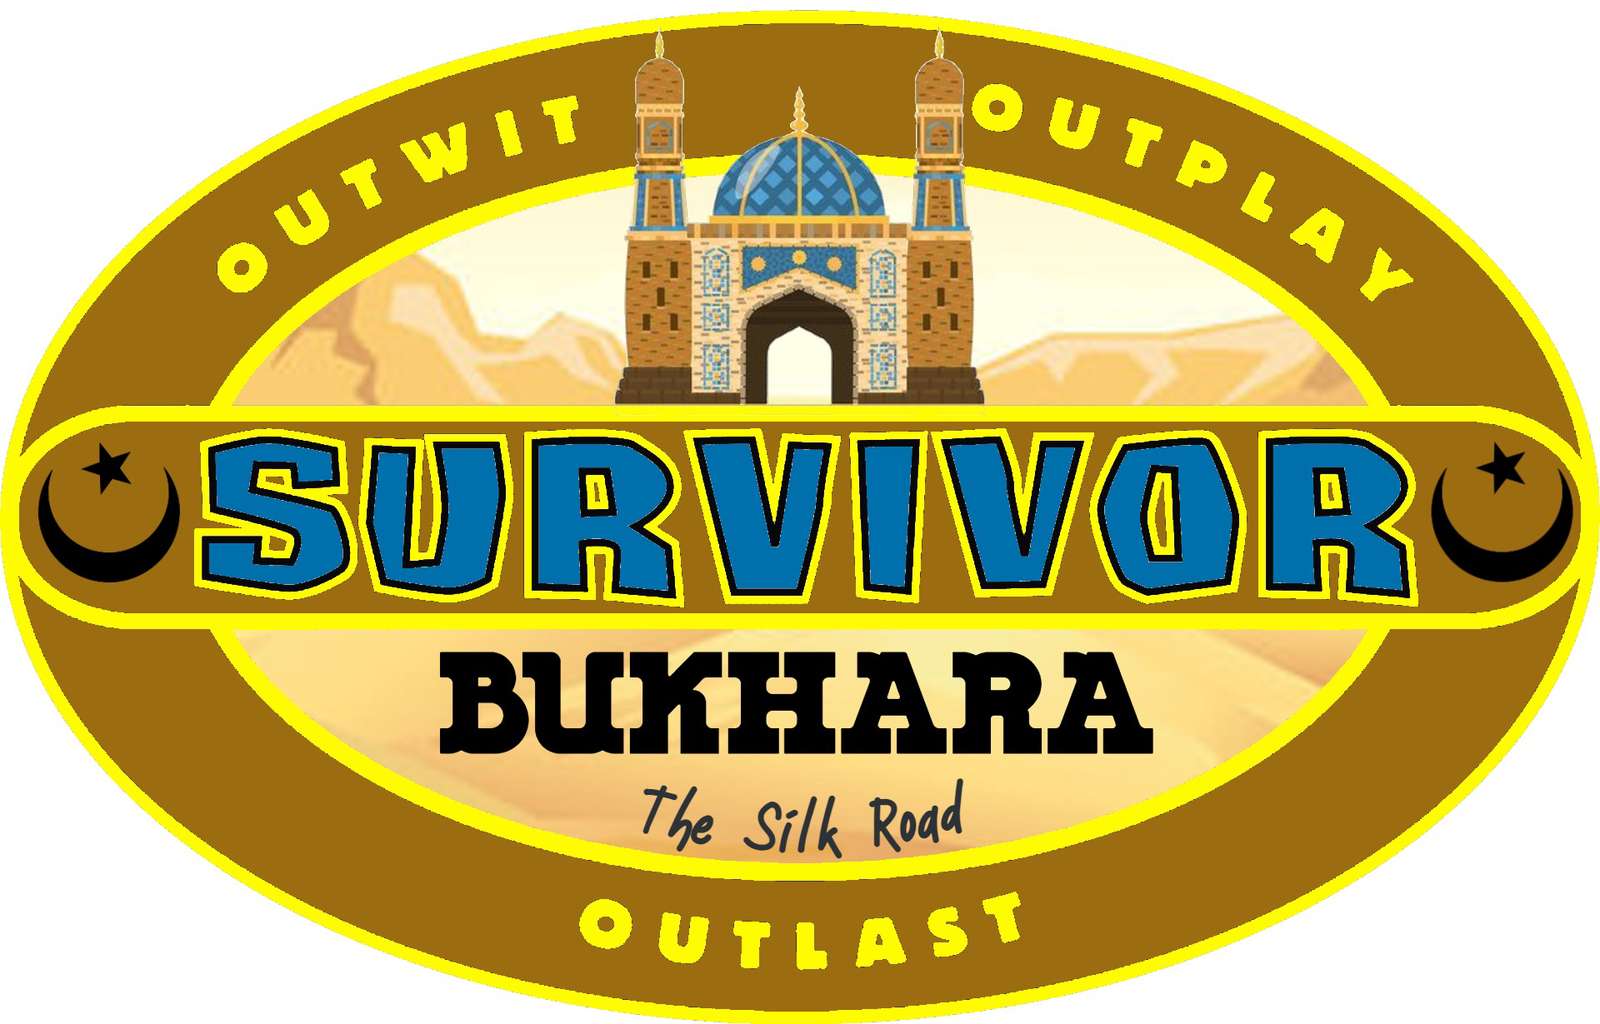 Sobrevivente Bukhara puzzle online a partir de fotografia